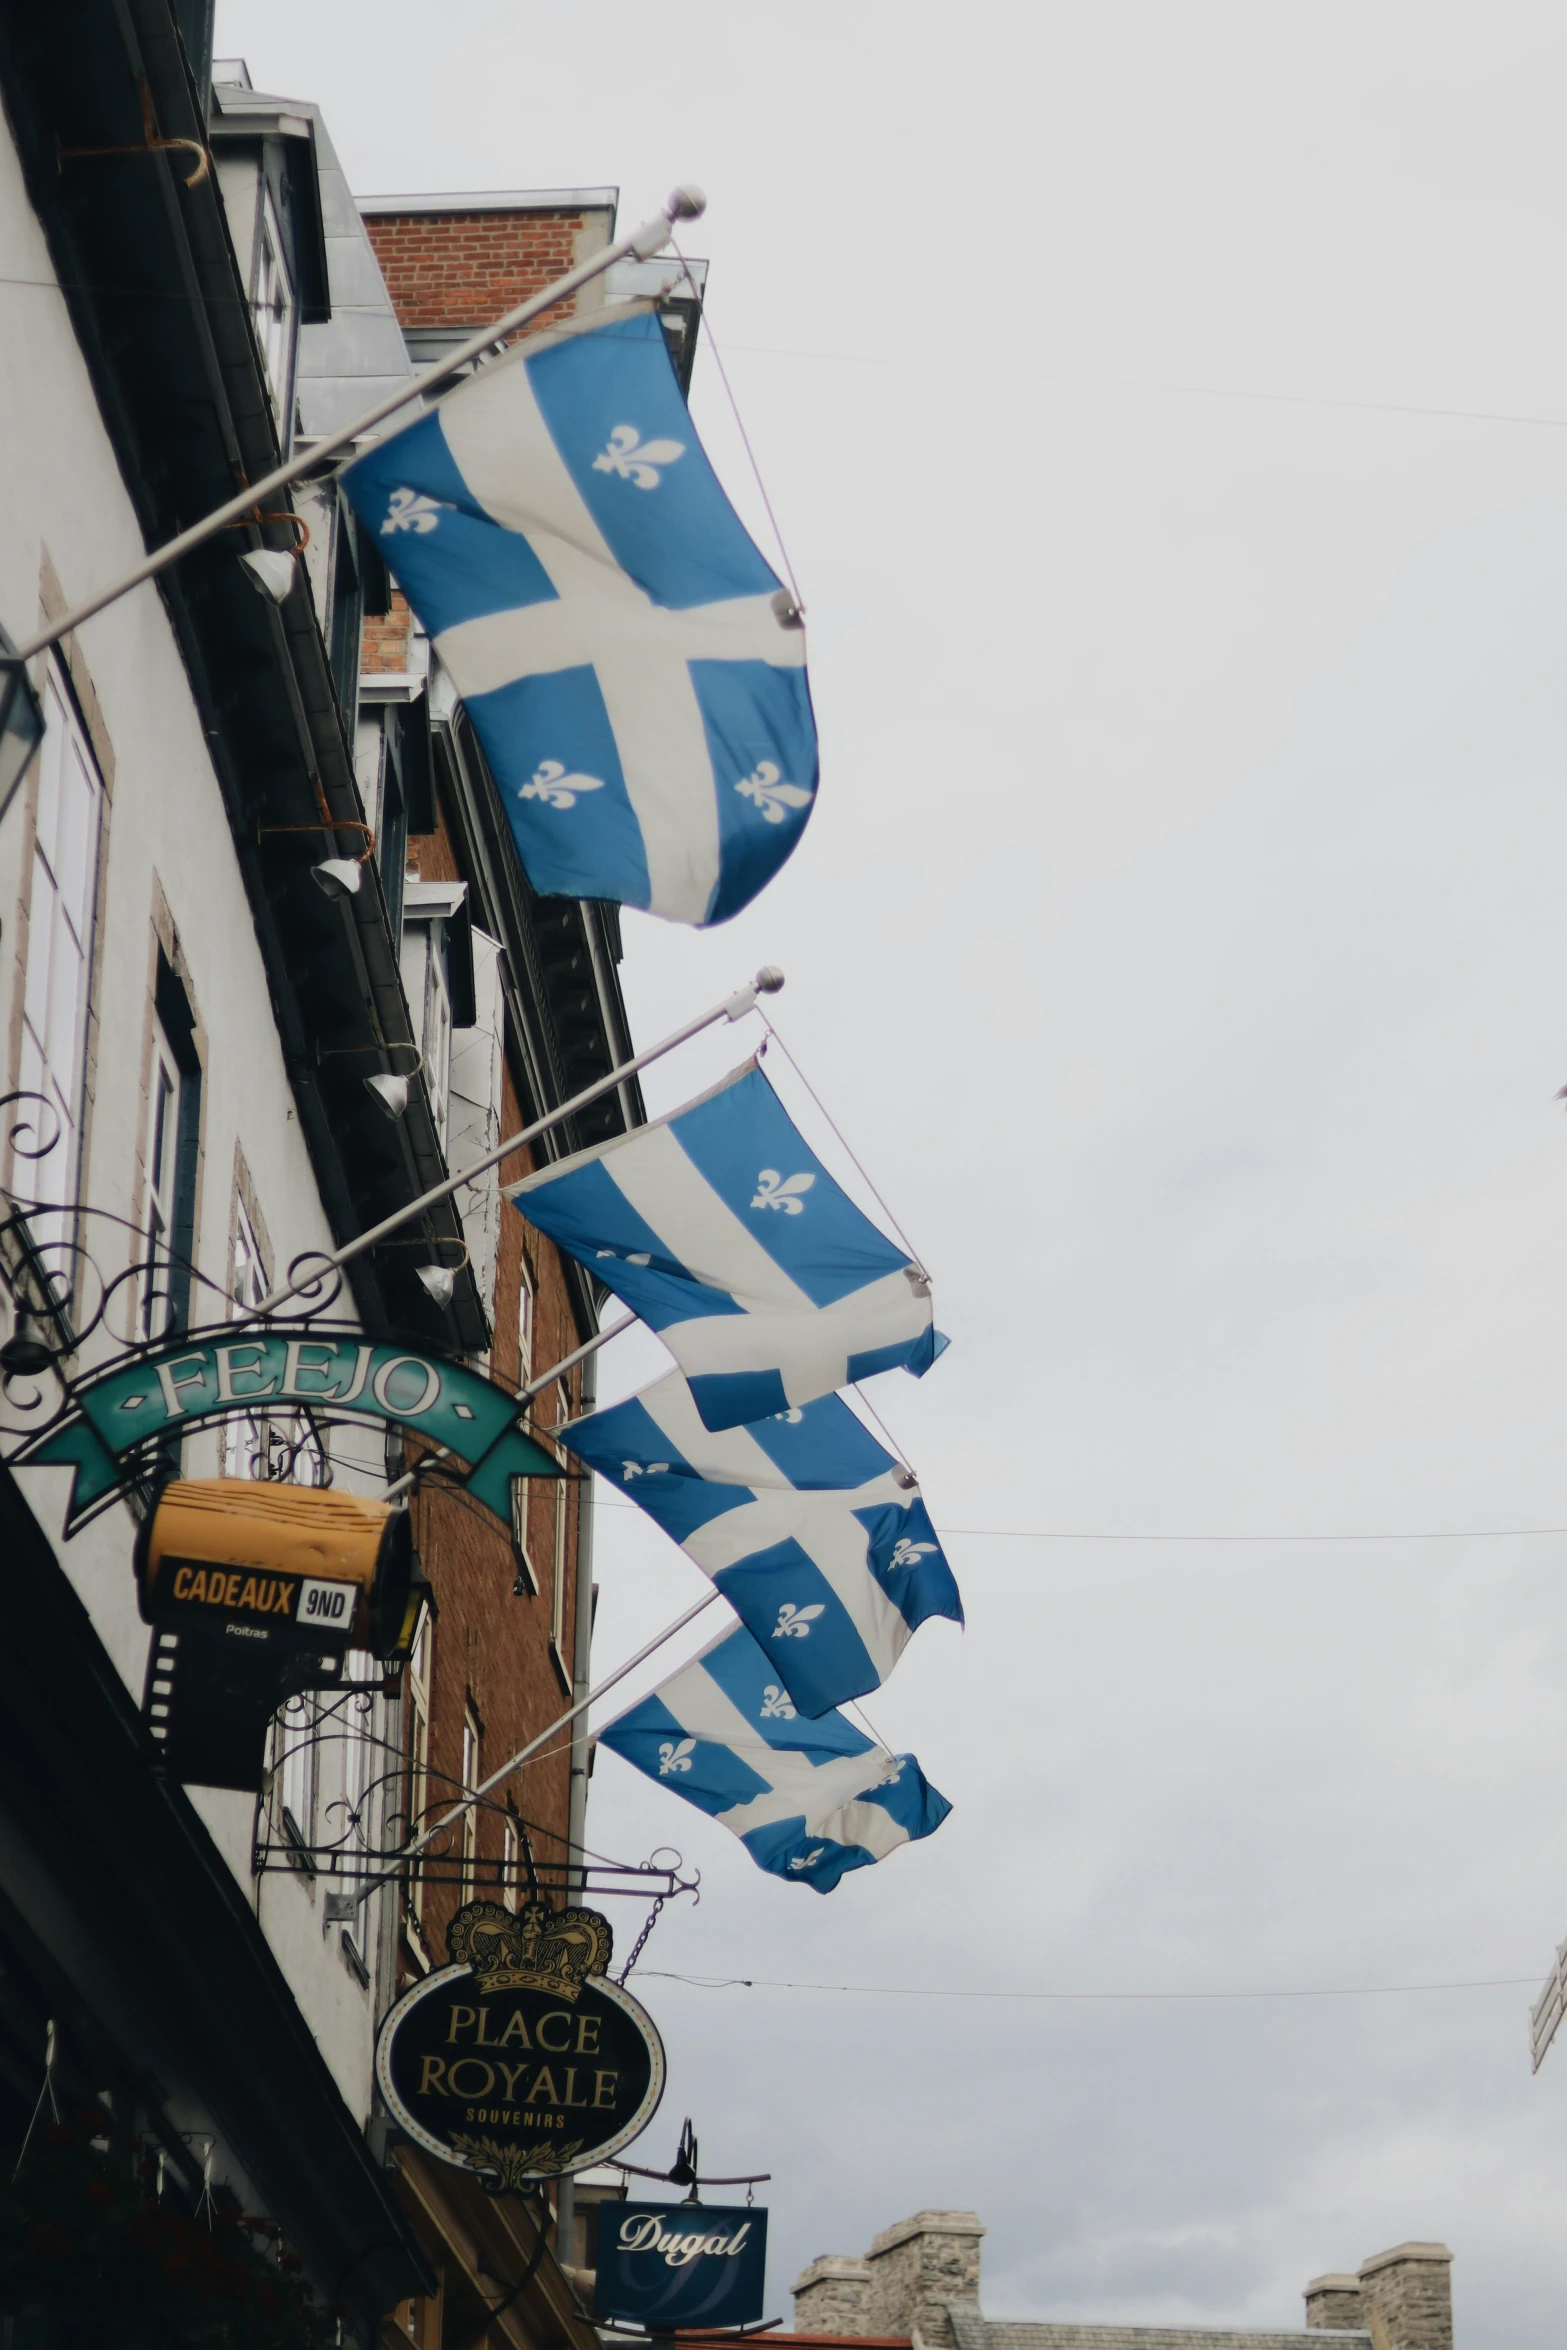 the flag flying over an irish restaurant